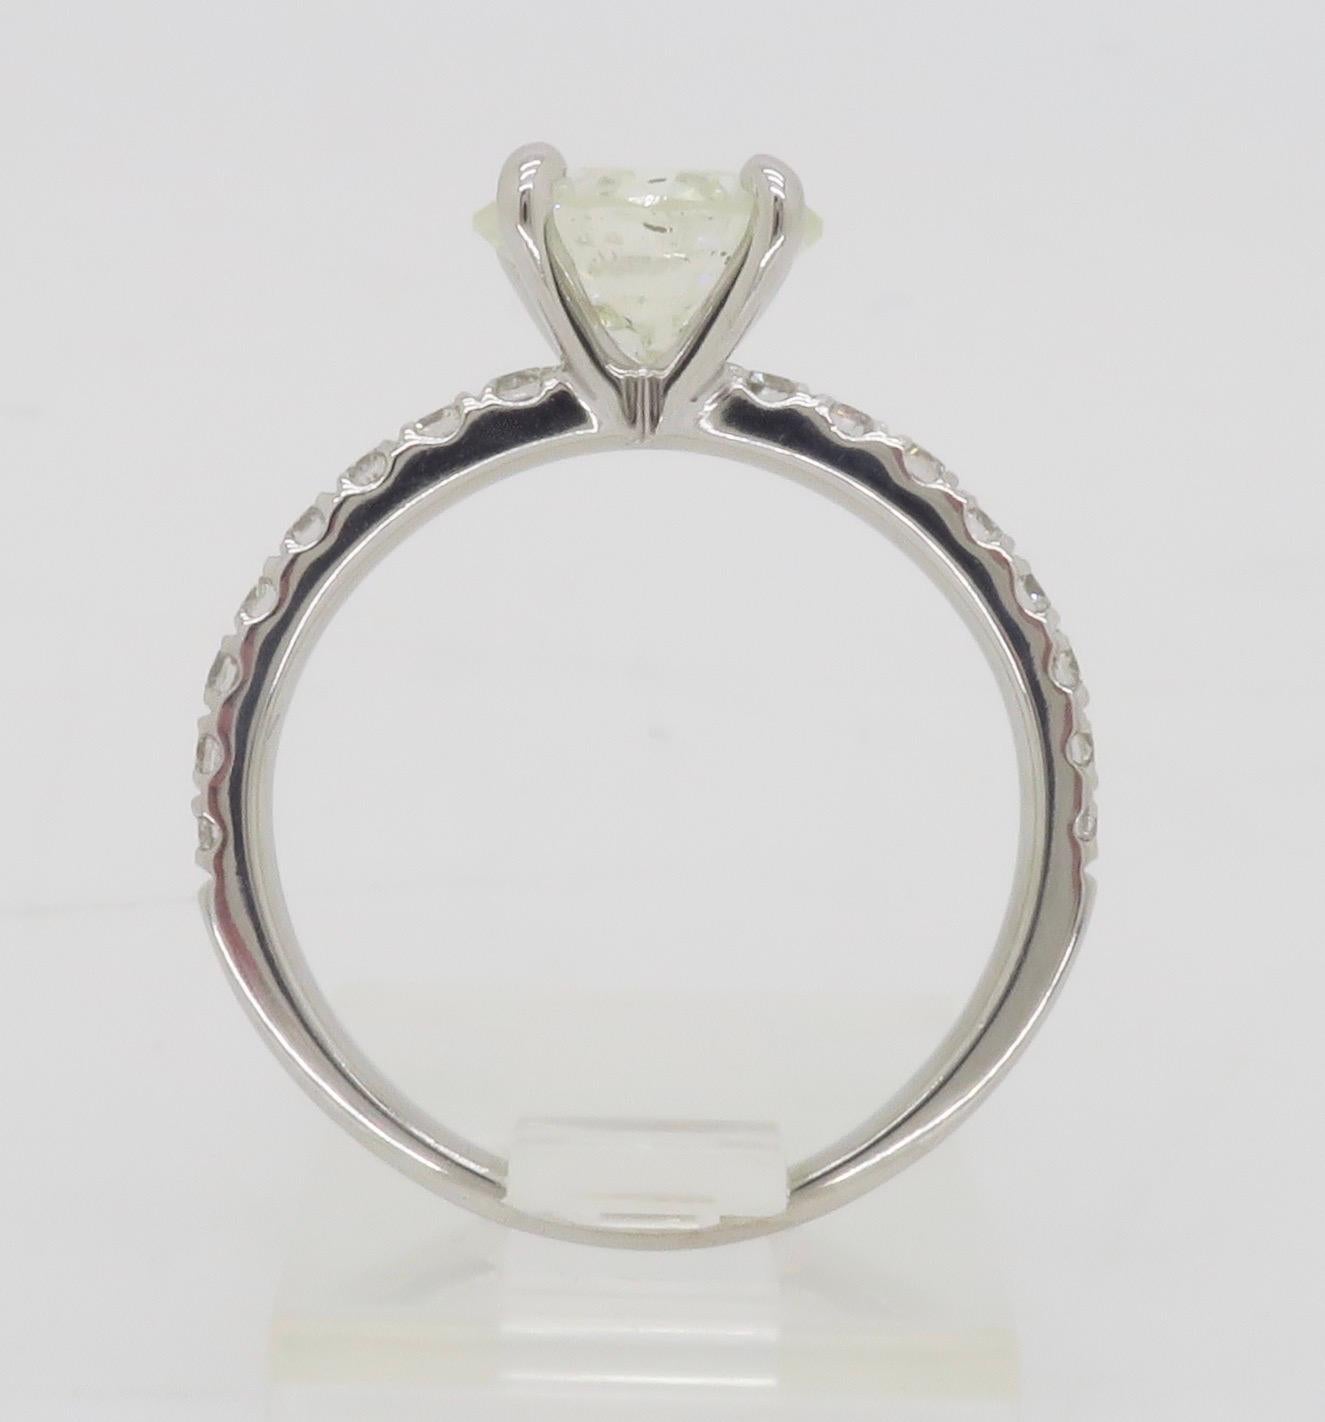 2.21ctw Round Diamond Engagement Ring in 14k White Gold  1